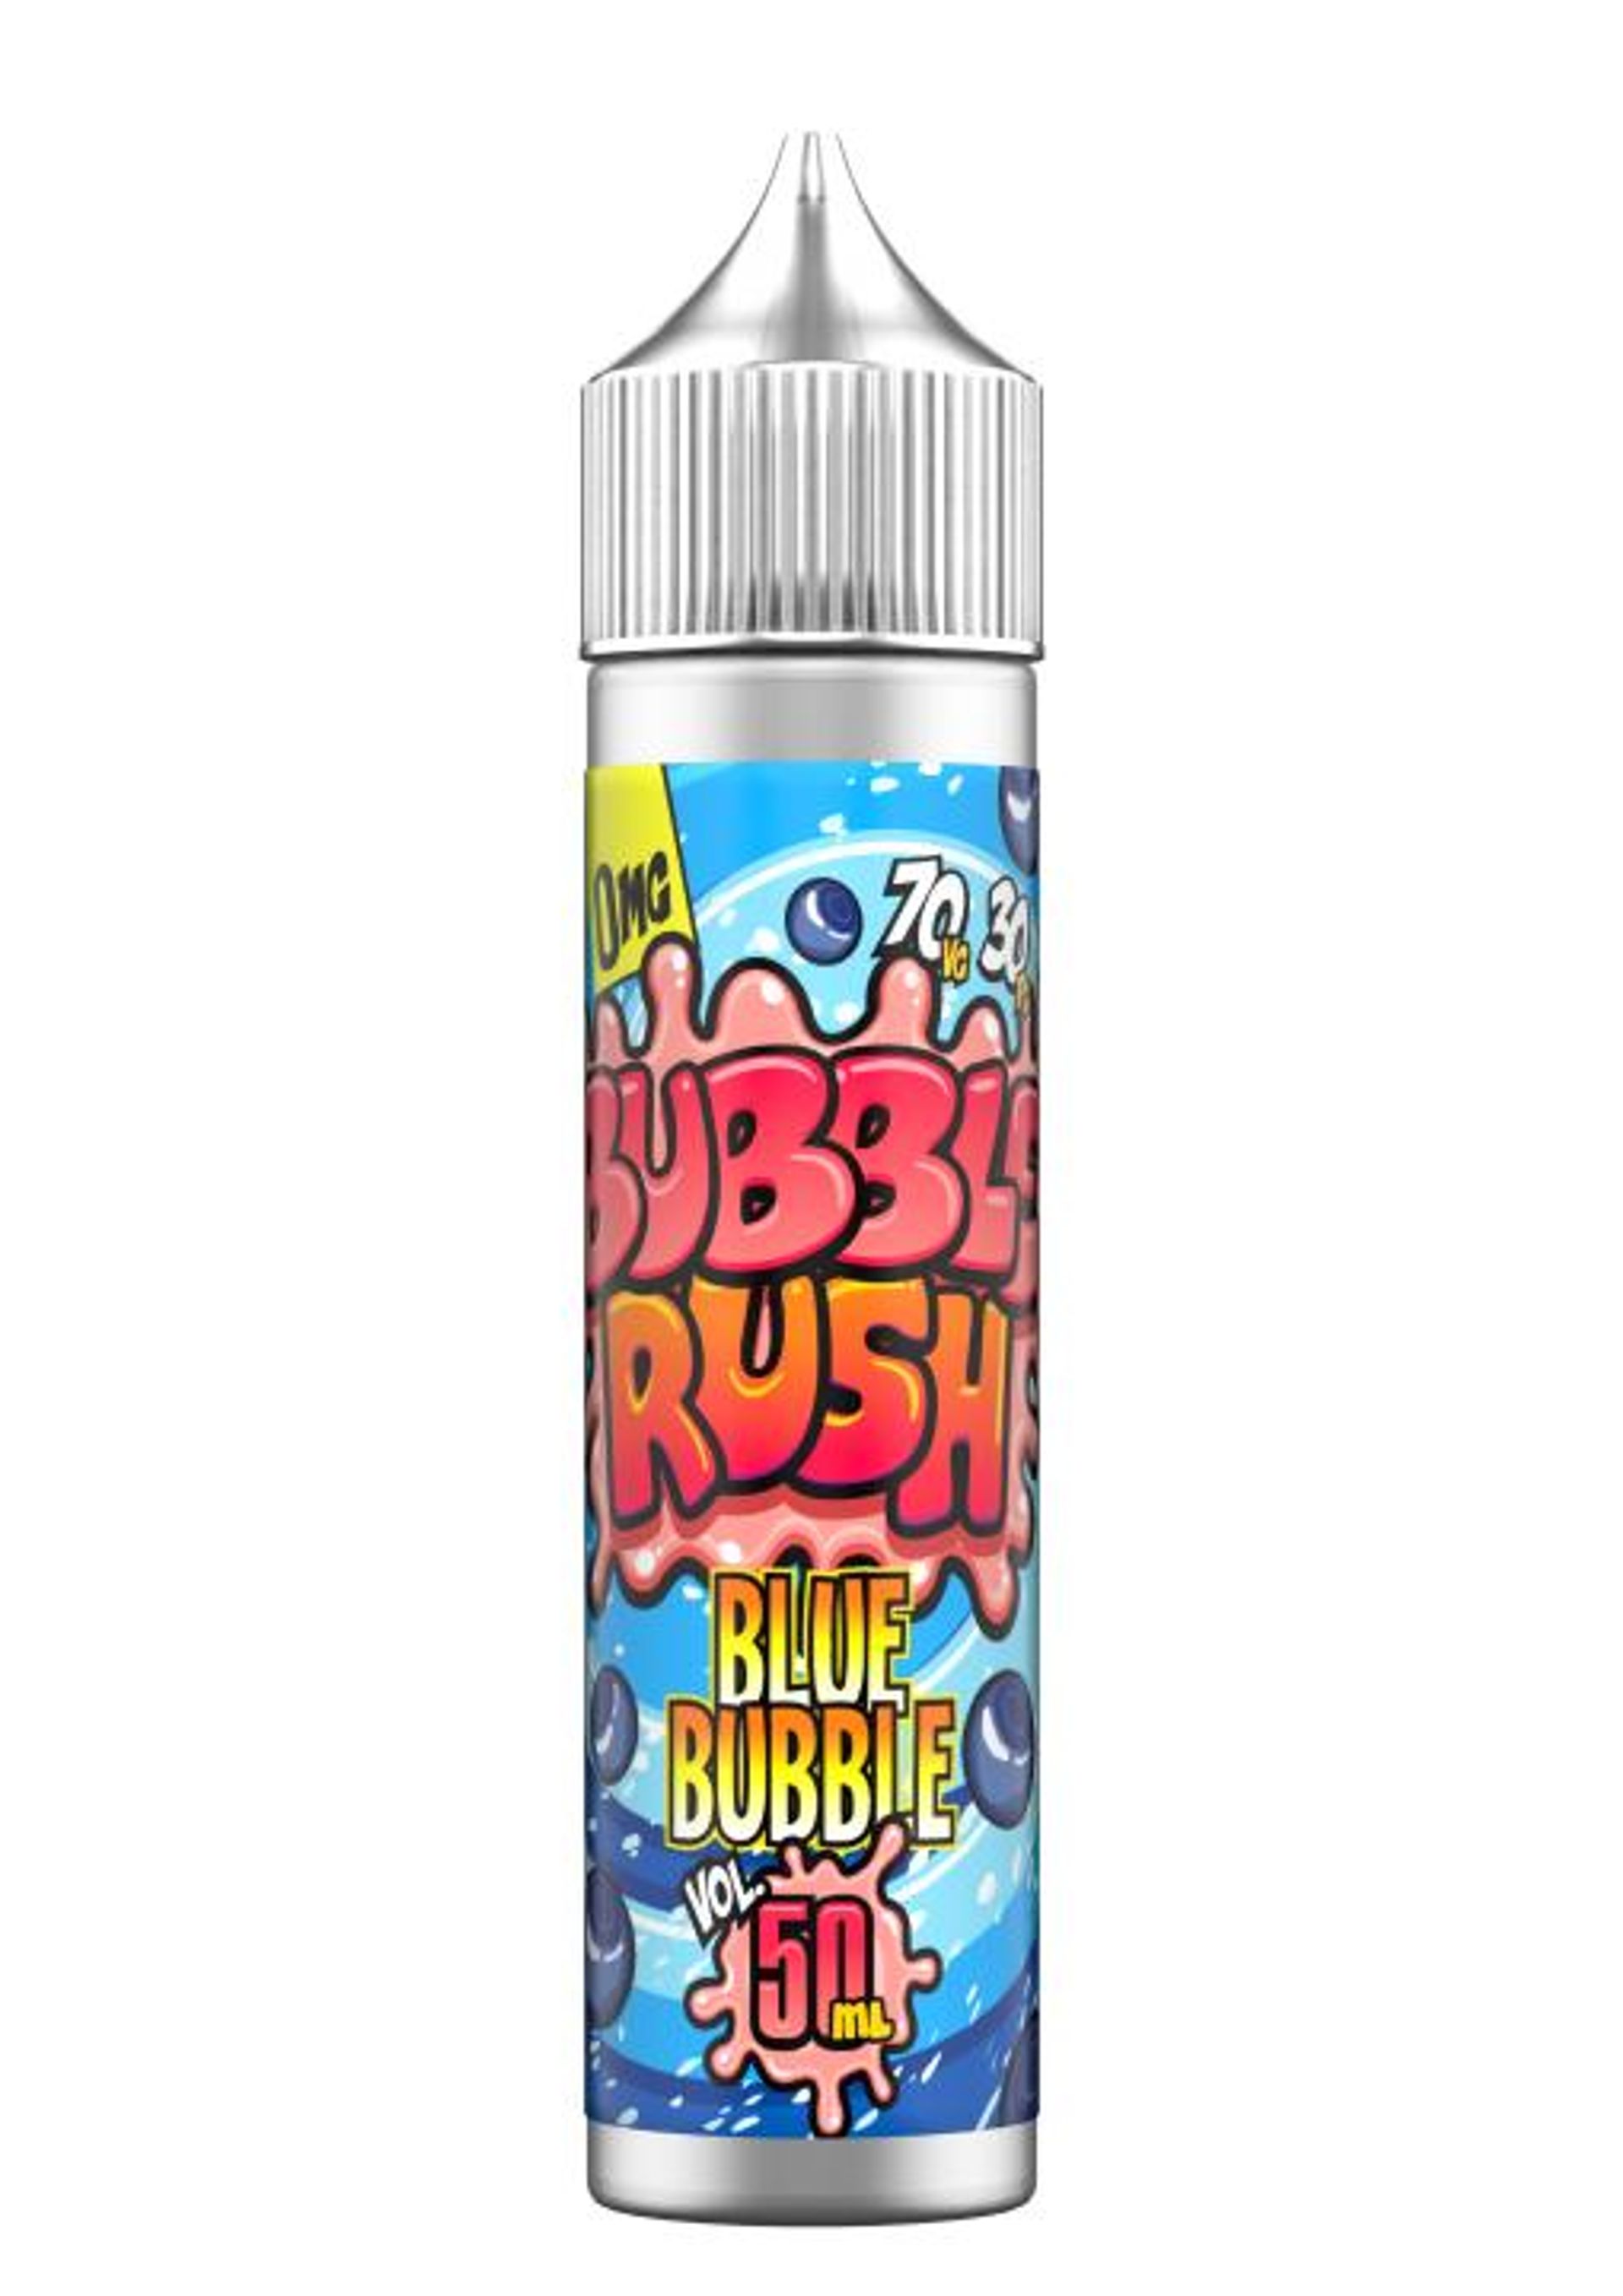 Image of Blue Bubble by Bubble Rush